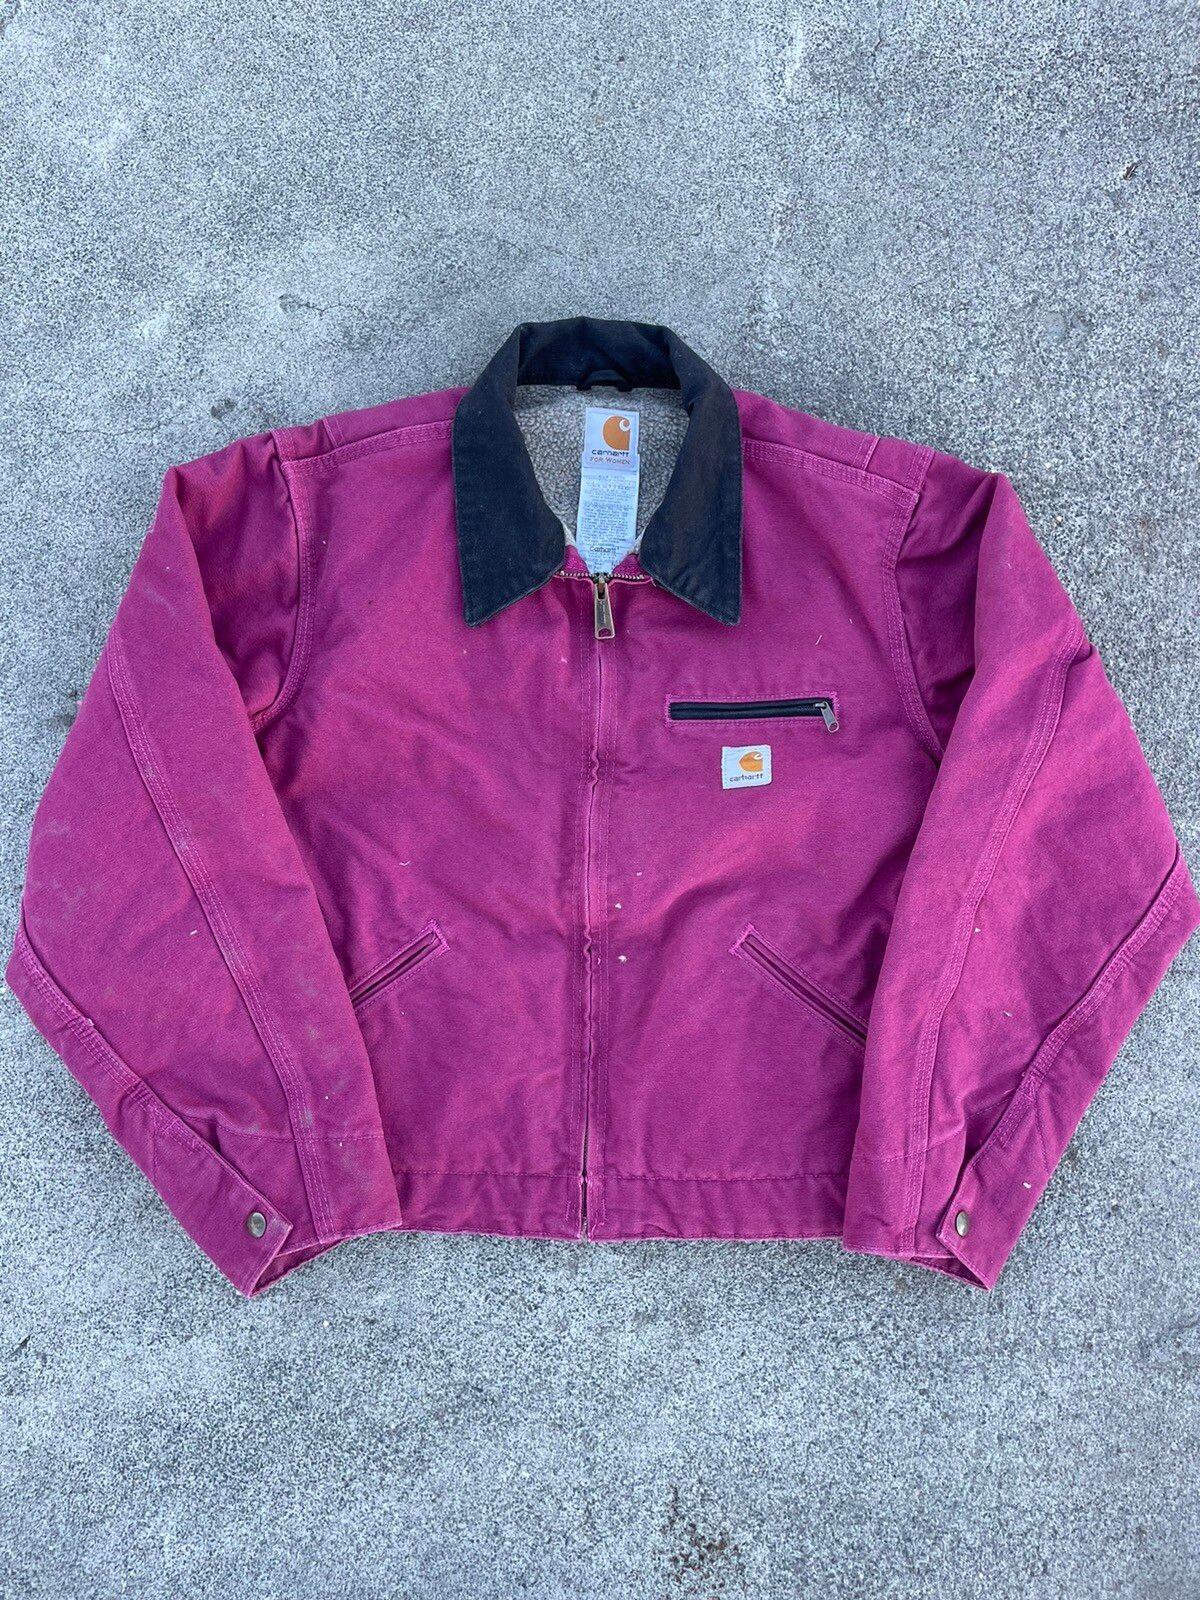 Vintage Vintage Faded Pink Detroit Style Carhartt Jacket Size US S / EU 44-46 / 1 - 1 Preview